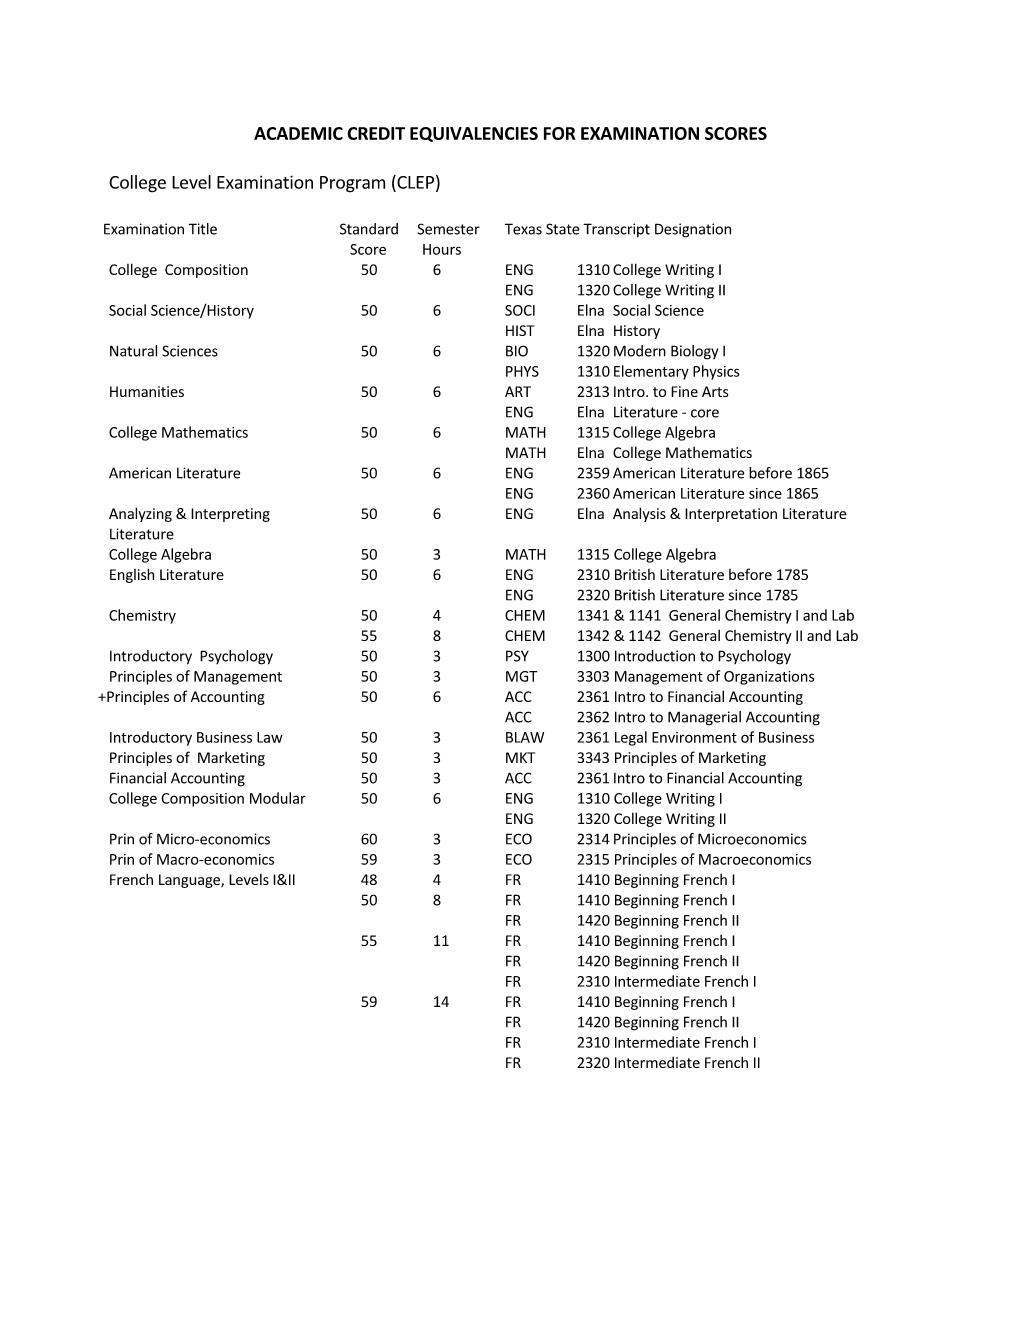 Academic Credit Equivalencies for Examination Scores